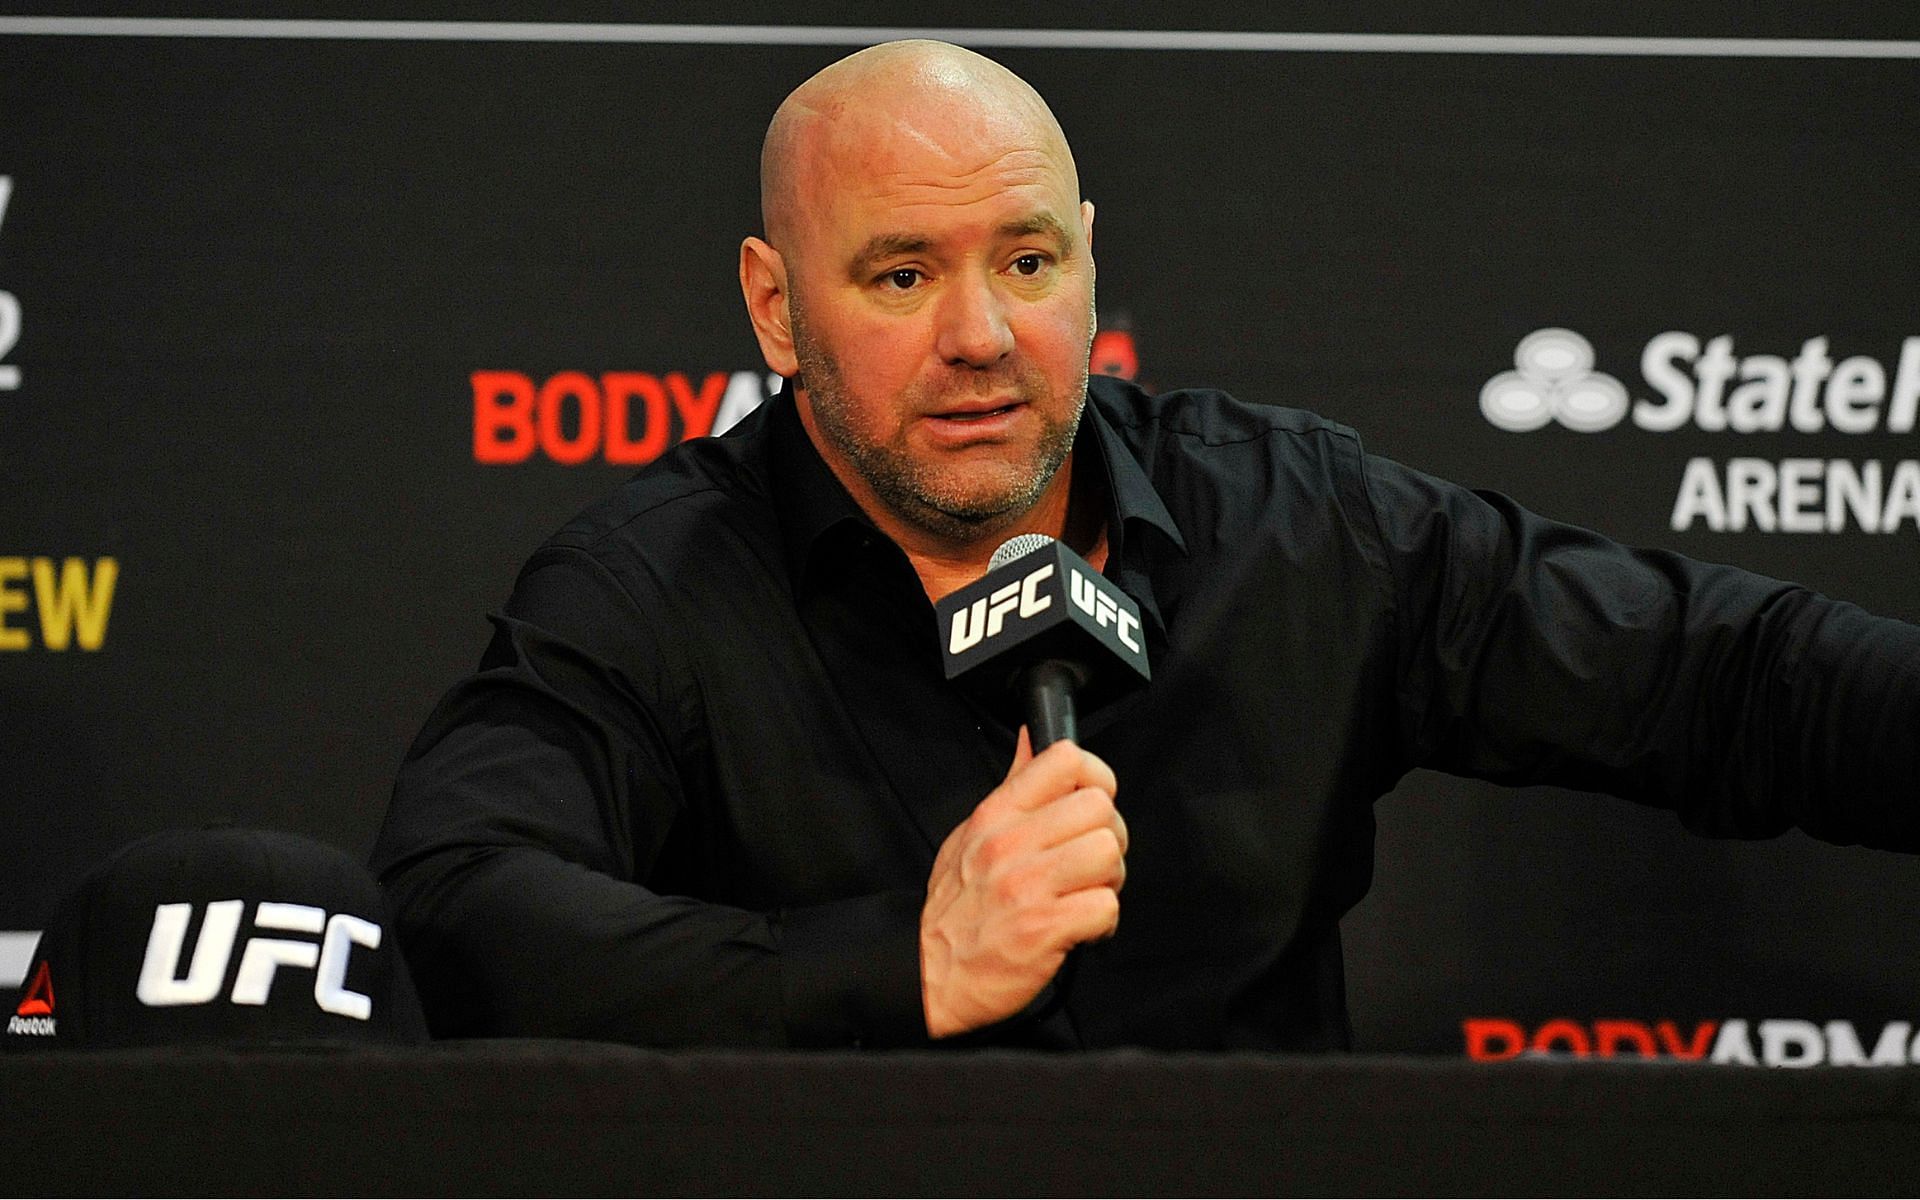 Dana White at UFC 236 press conference